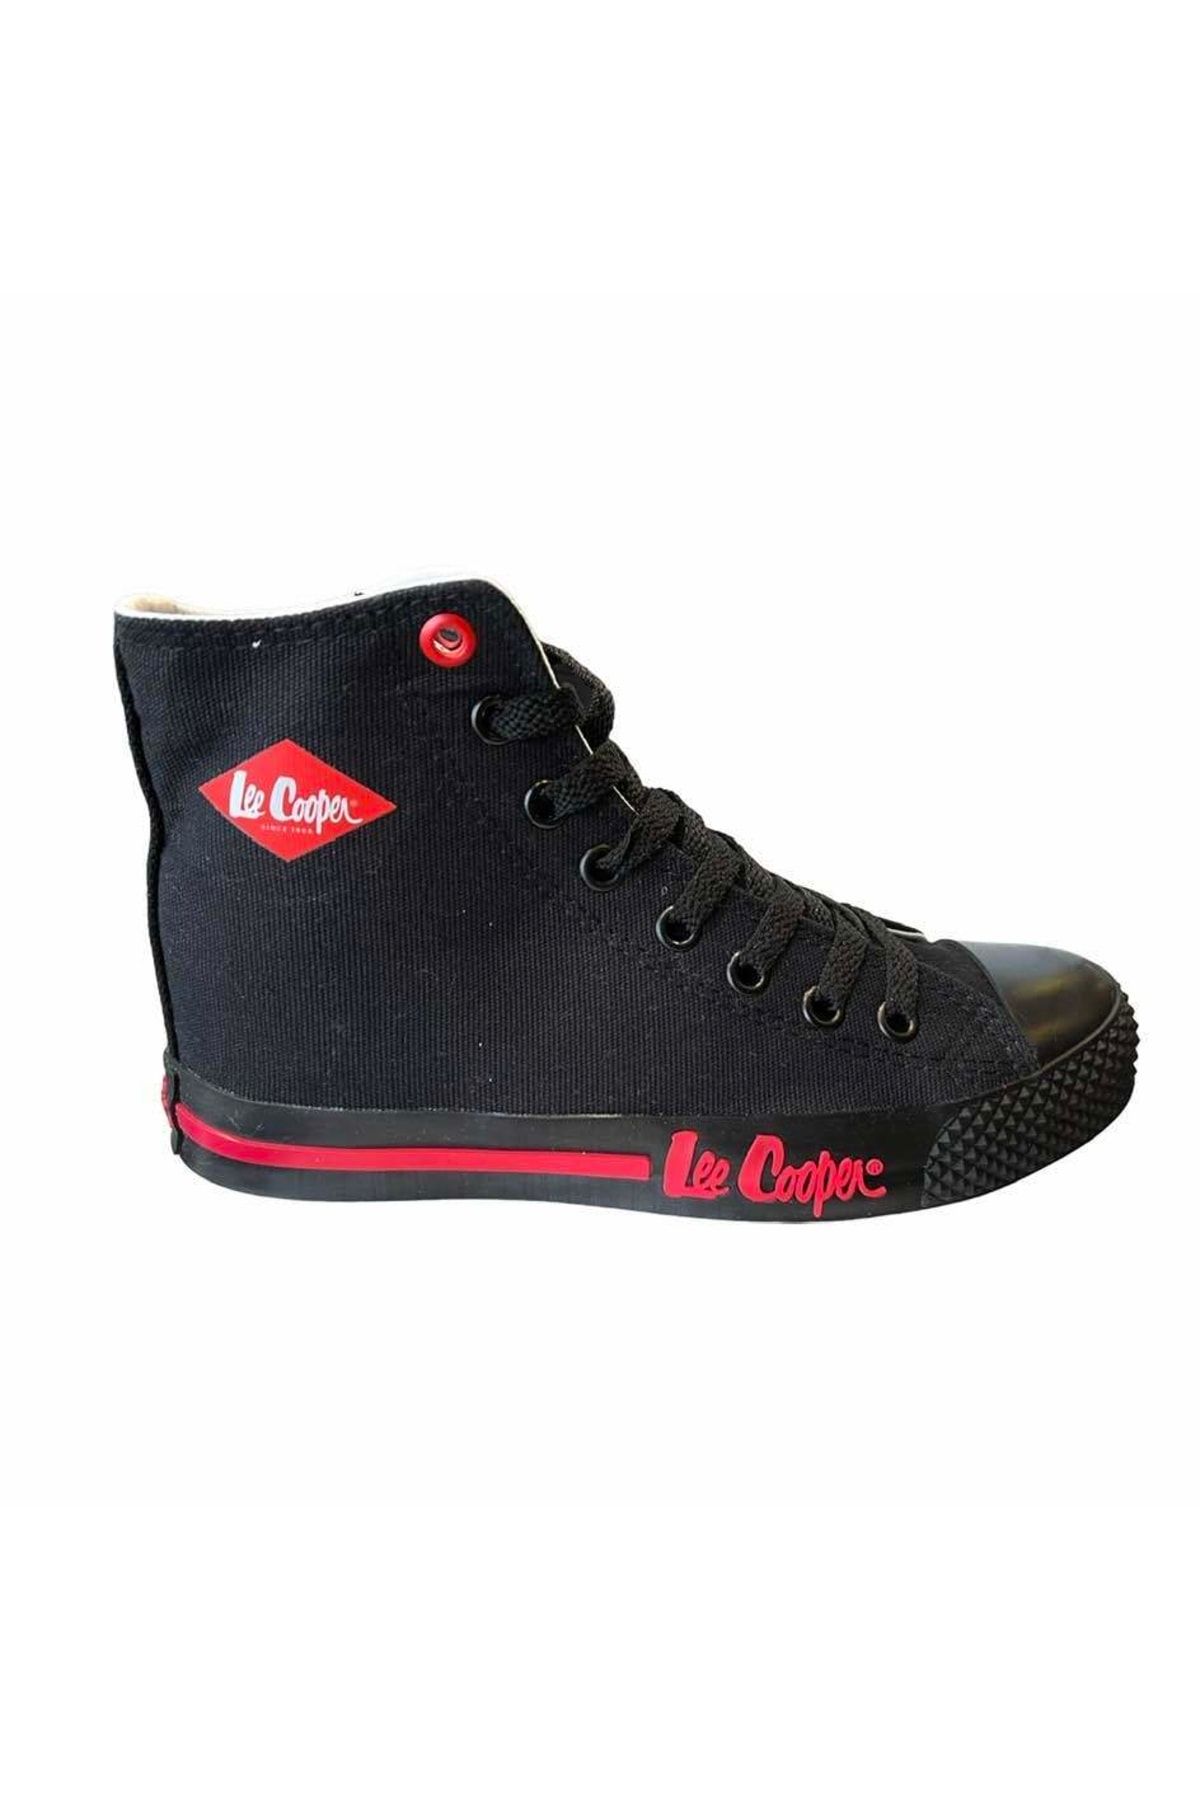 Buy Lee Cooper Men's Black Sneakers-9 UK (43 EU) (10 US) (LC2020A) at  Amazon.in